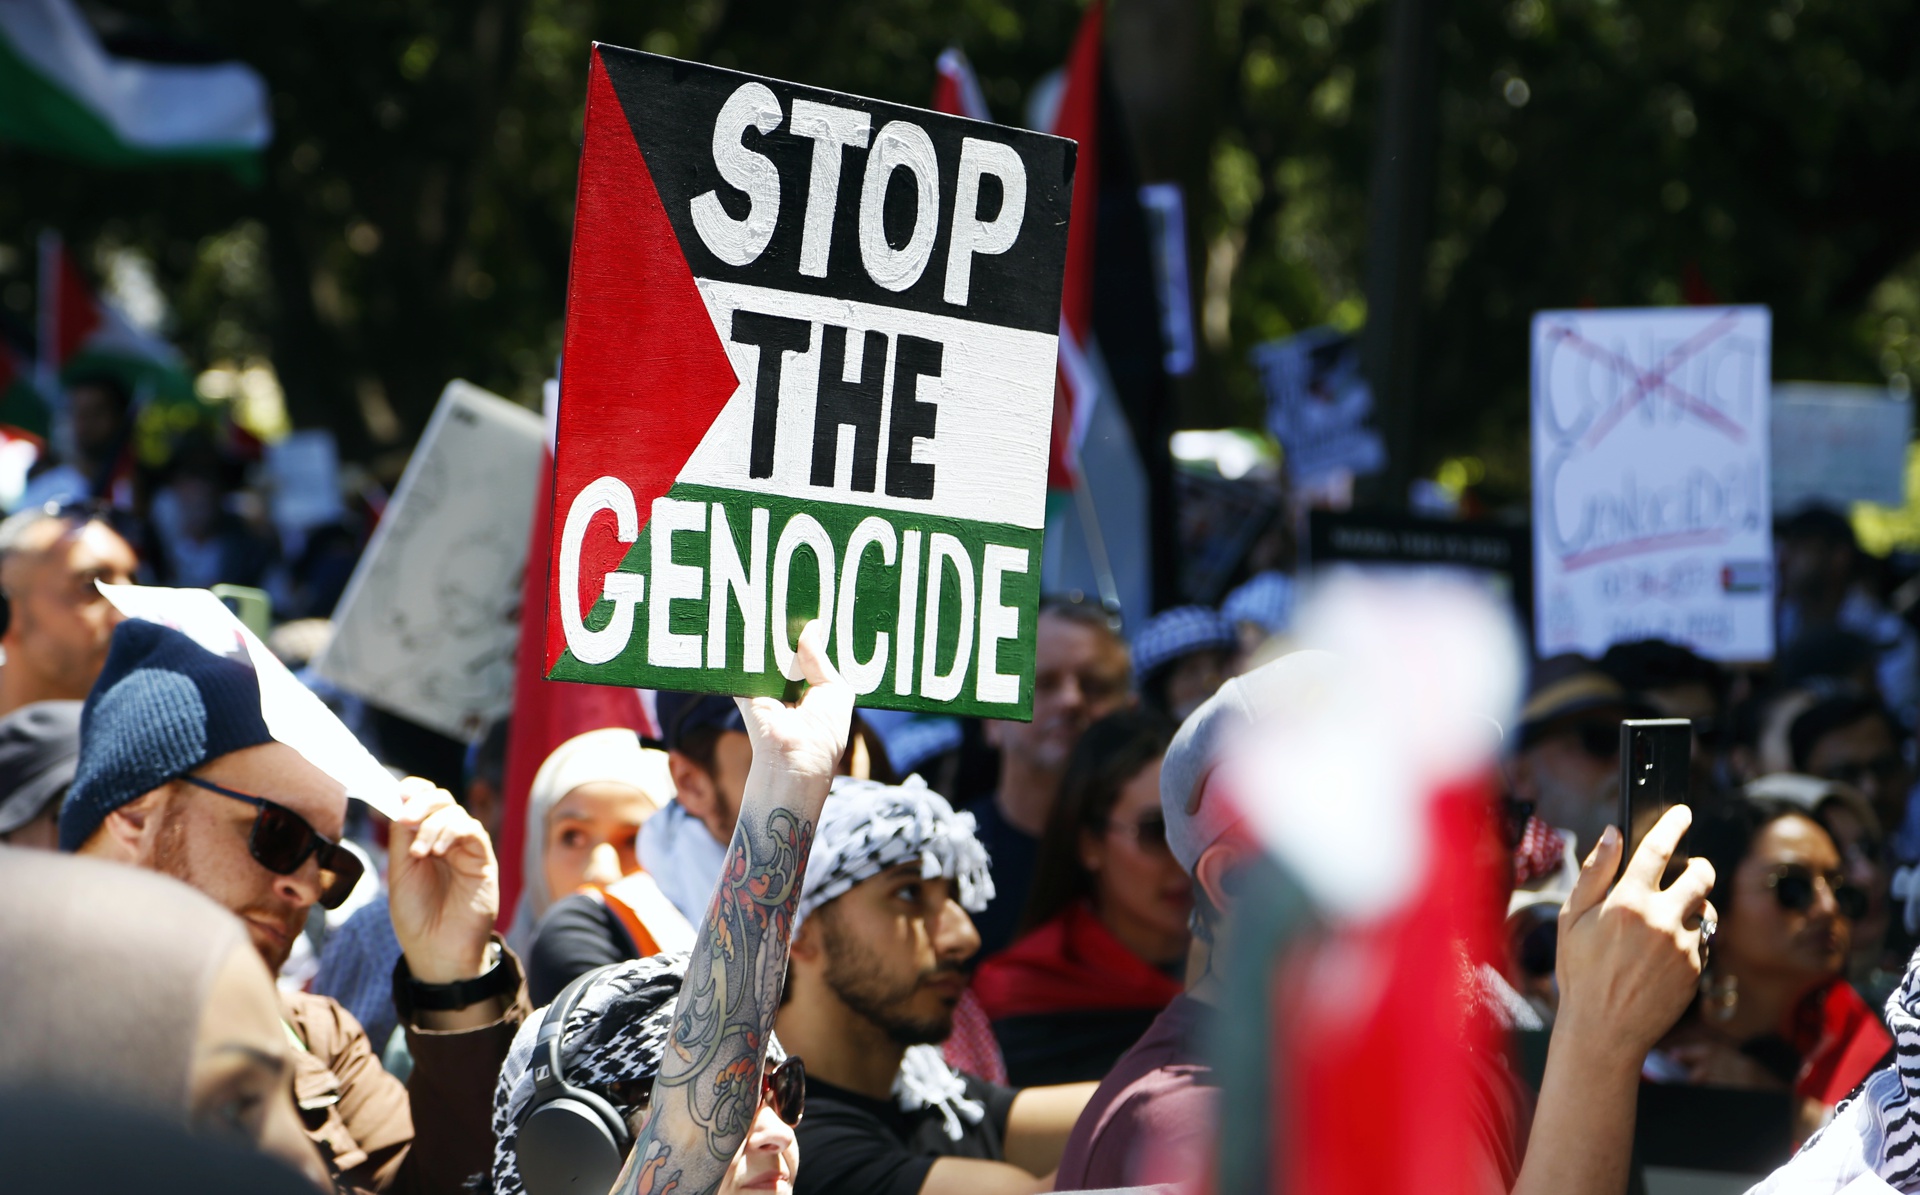 Stop the genocide, Gadi/Sydney